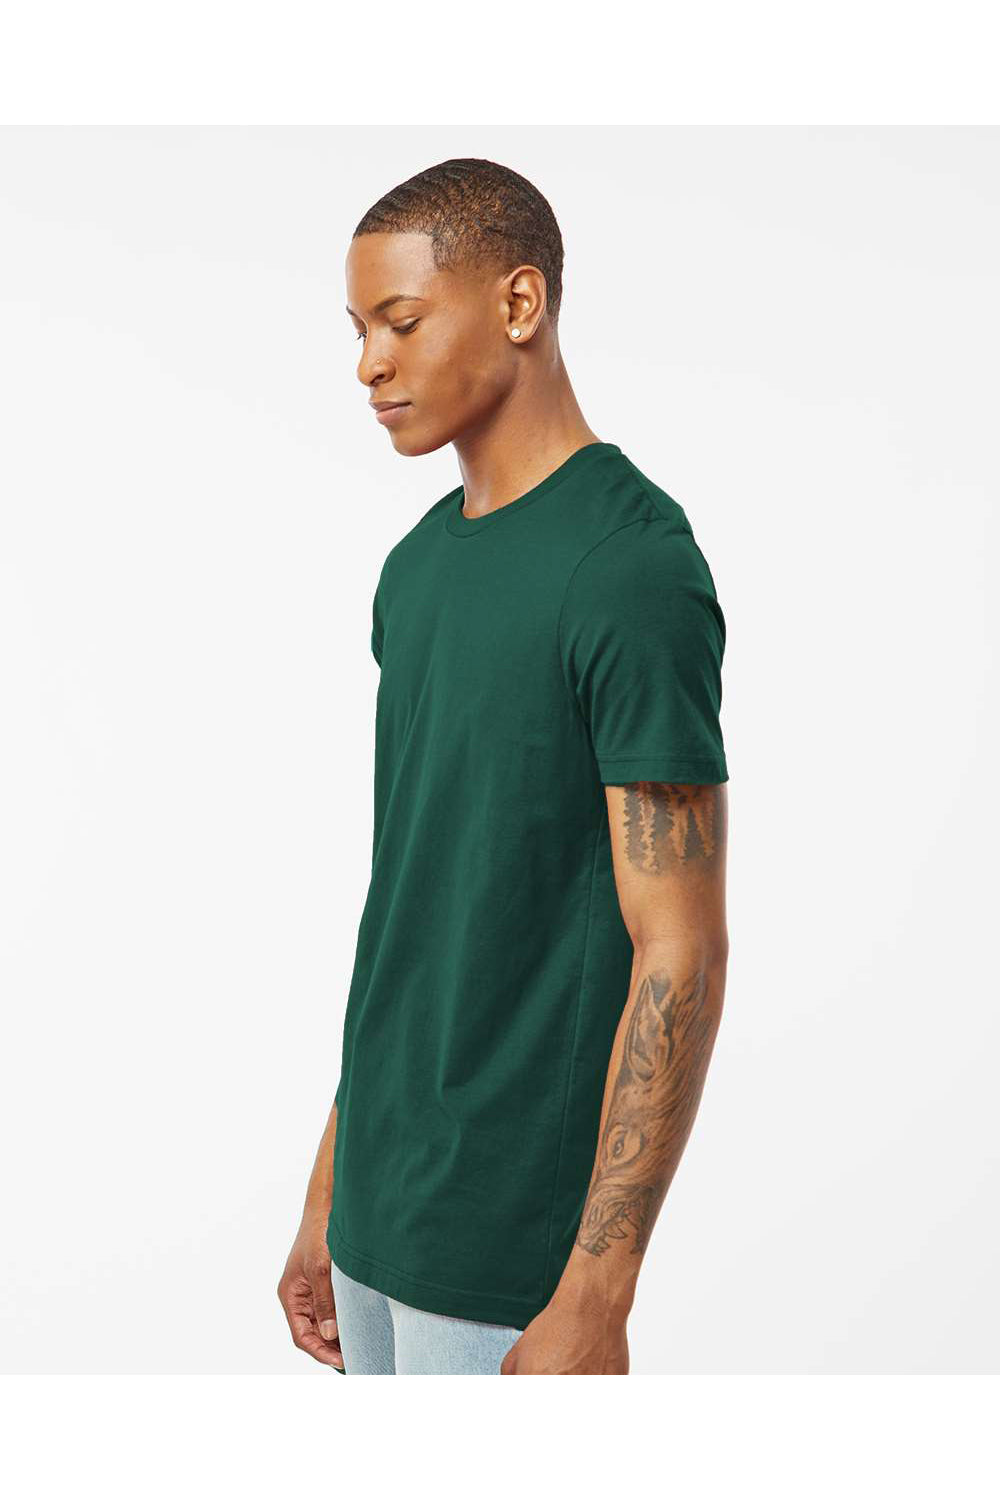 Tultex 602 Mens Short Sleeve Crewneck T-Shirt Forest Green Model Side